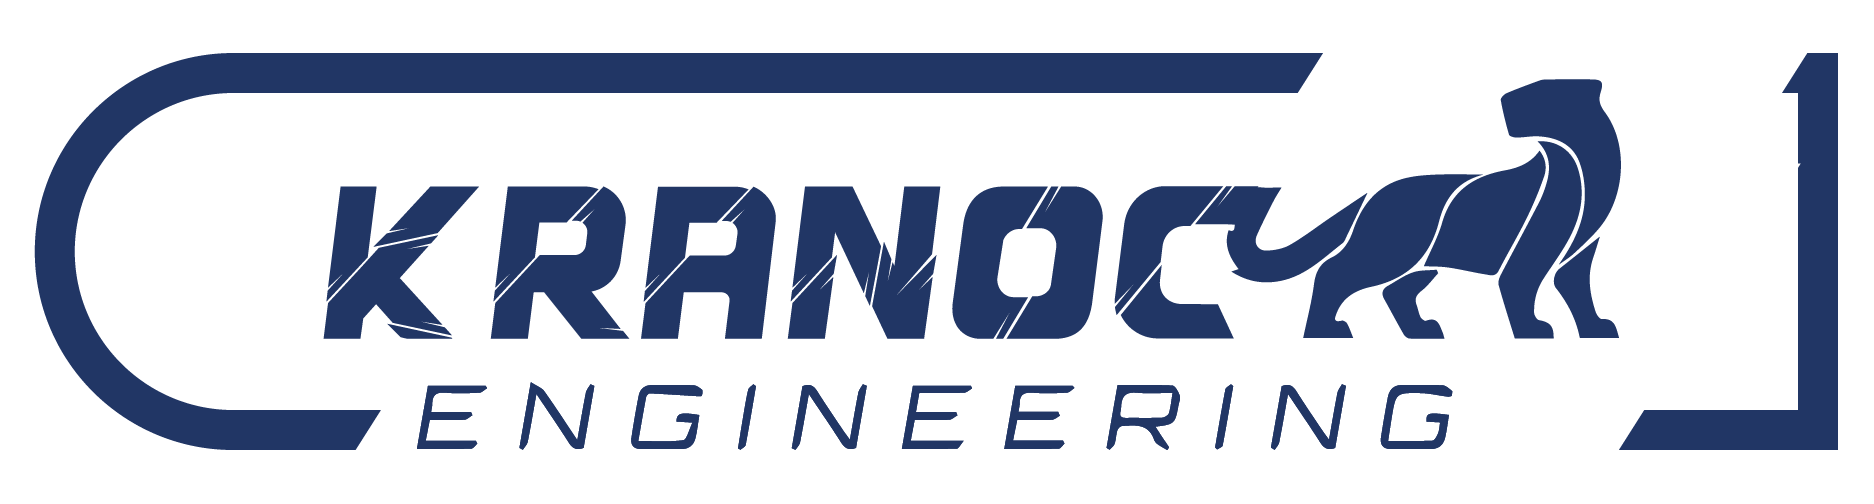 Kranoc Engineering Limited